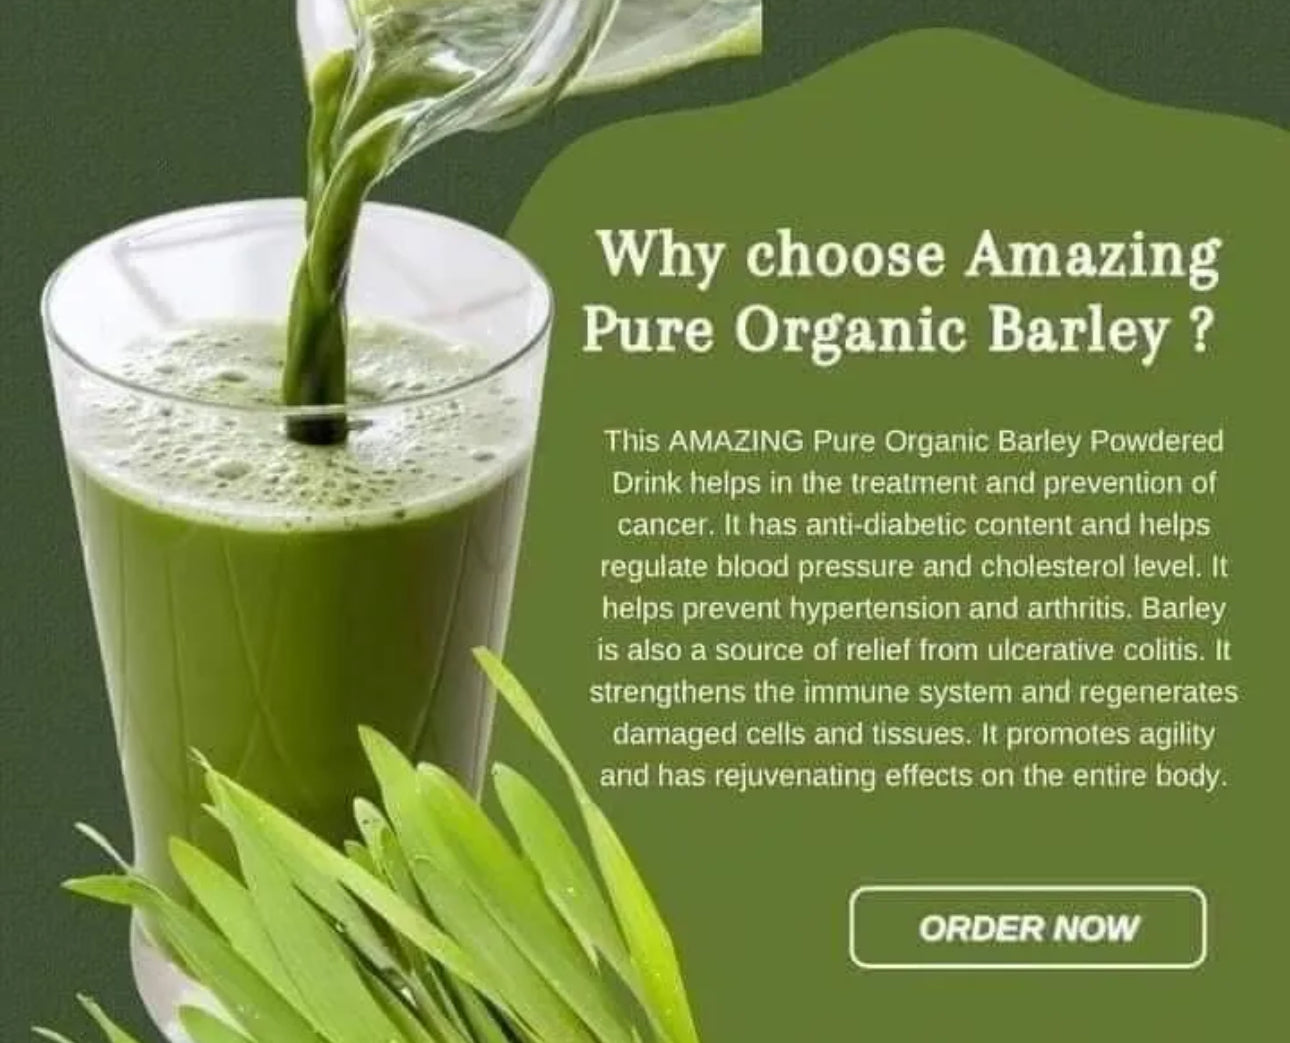 Amazing Pure Organic Barley Powdered Drink